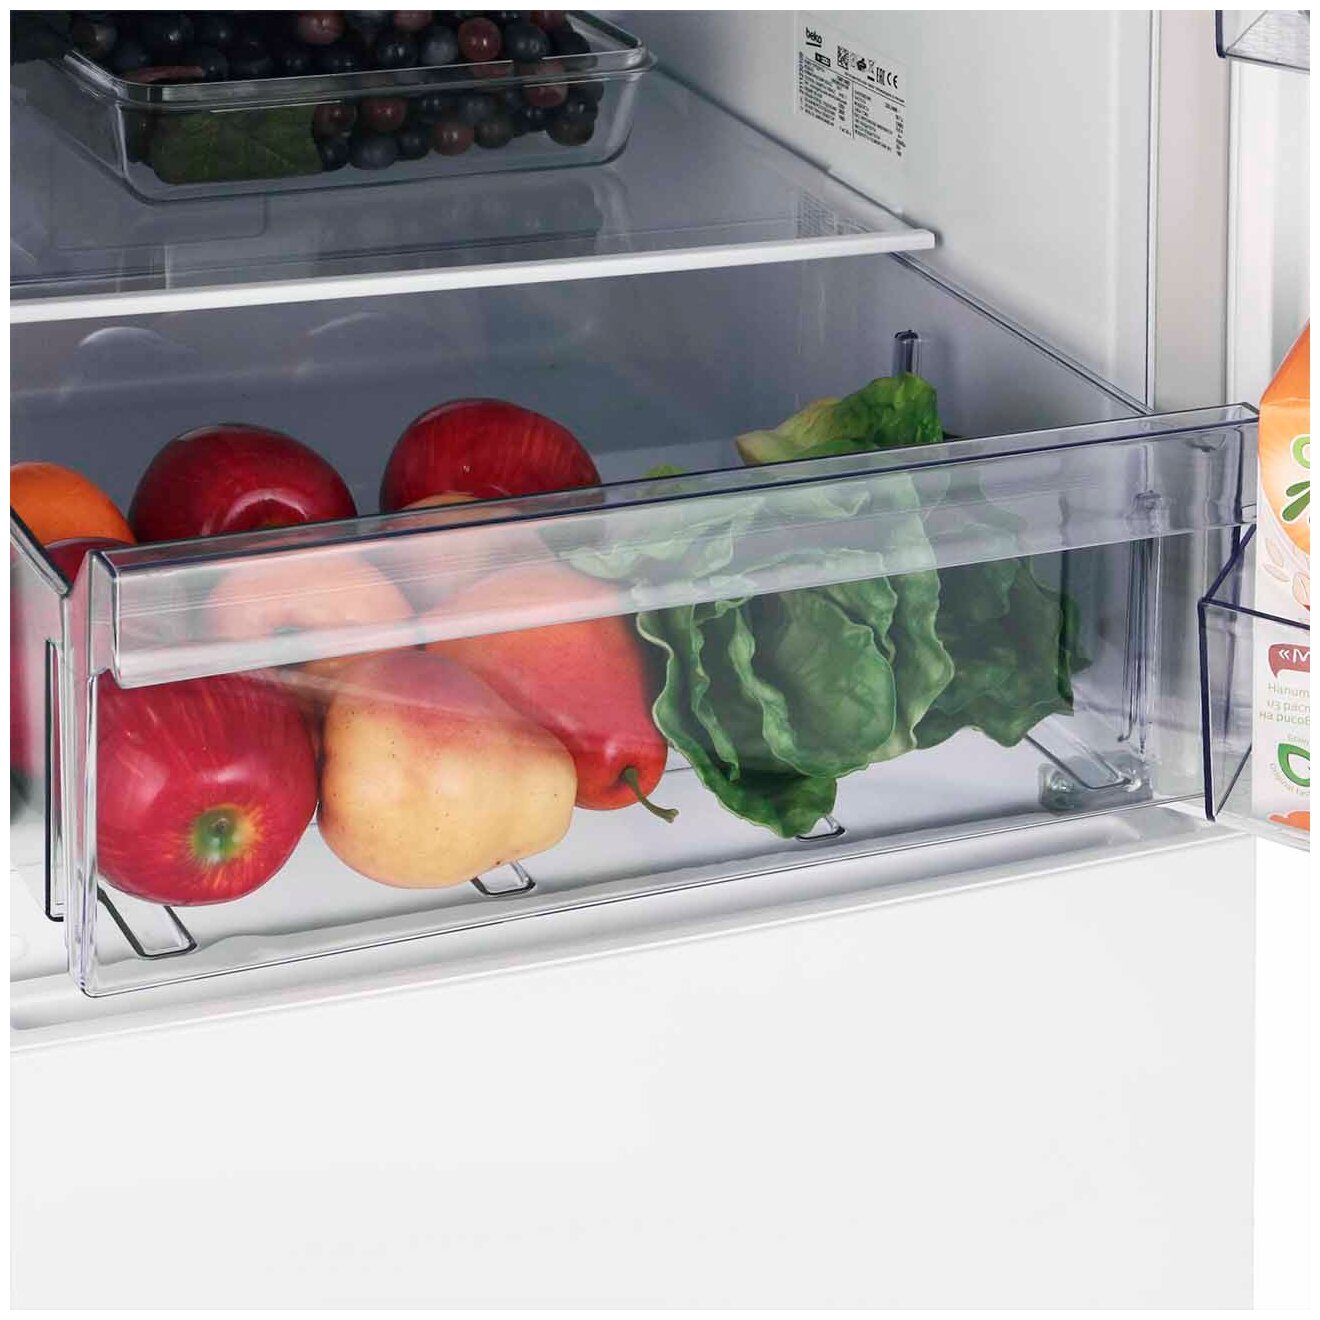 Двухкамерный холодильник Beko CNKDN6335KC0W, No Frost, белый